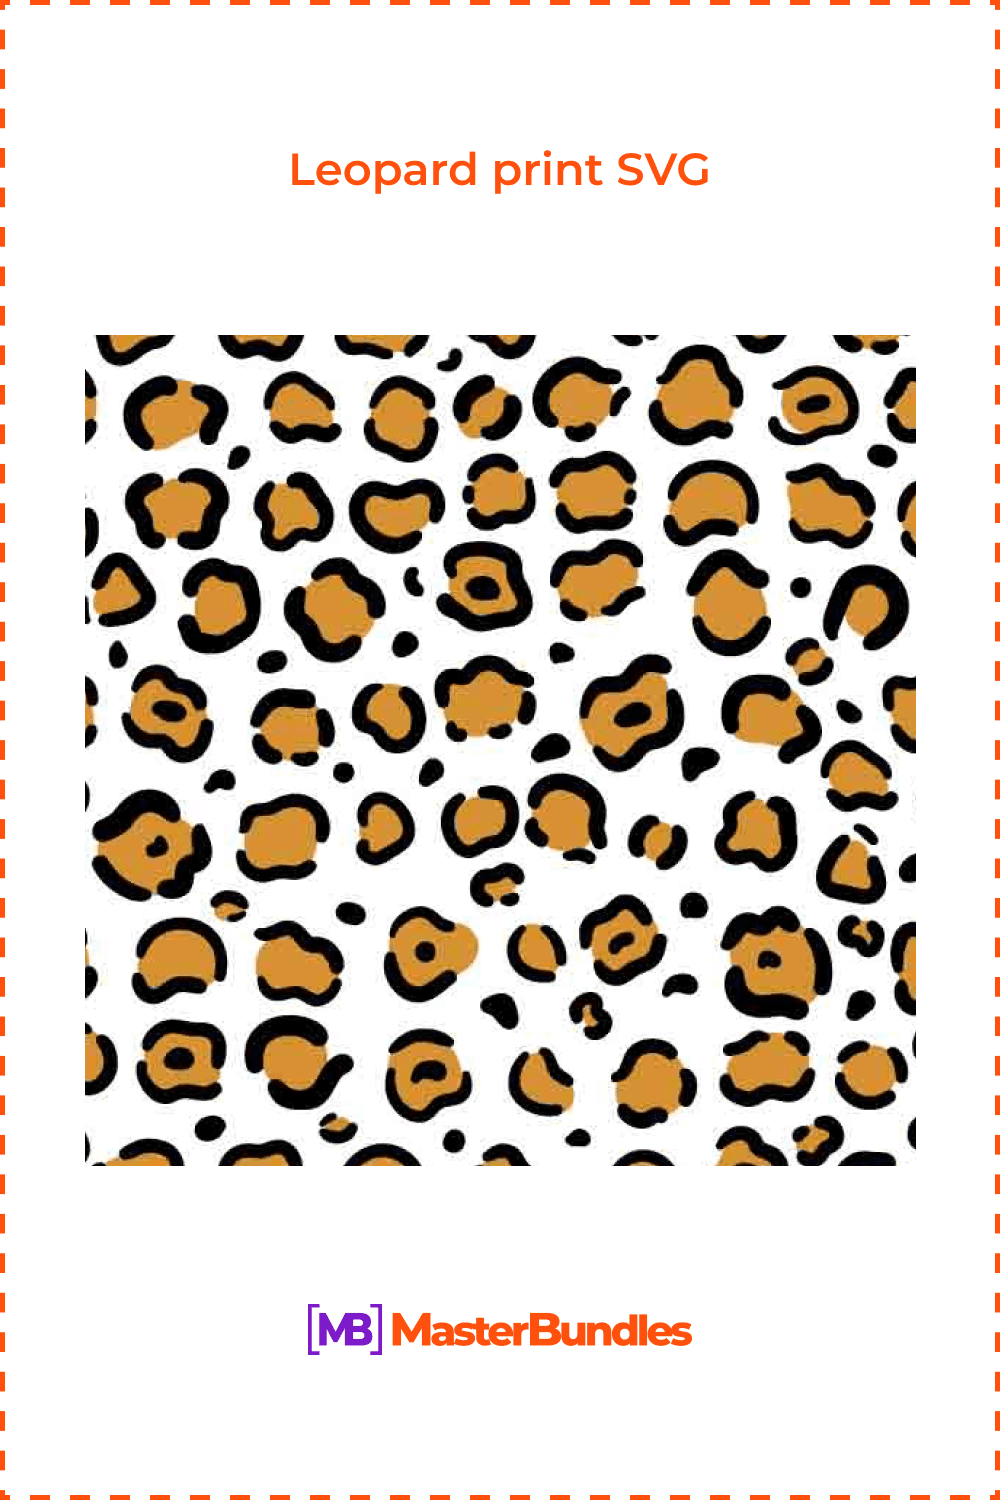 Leopard print SVG.